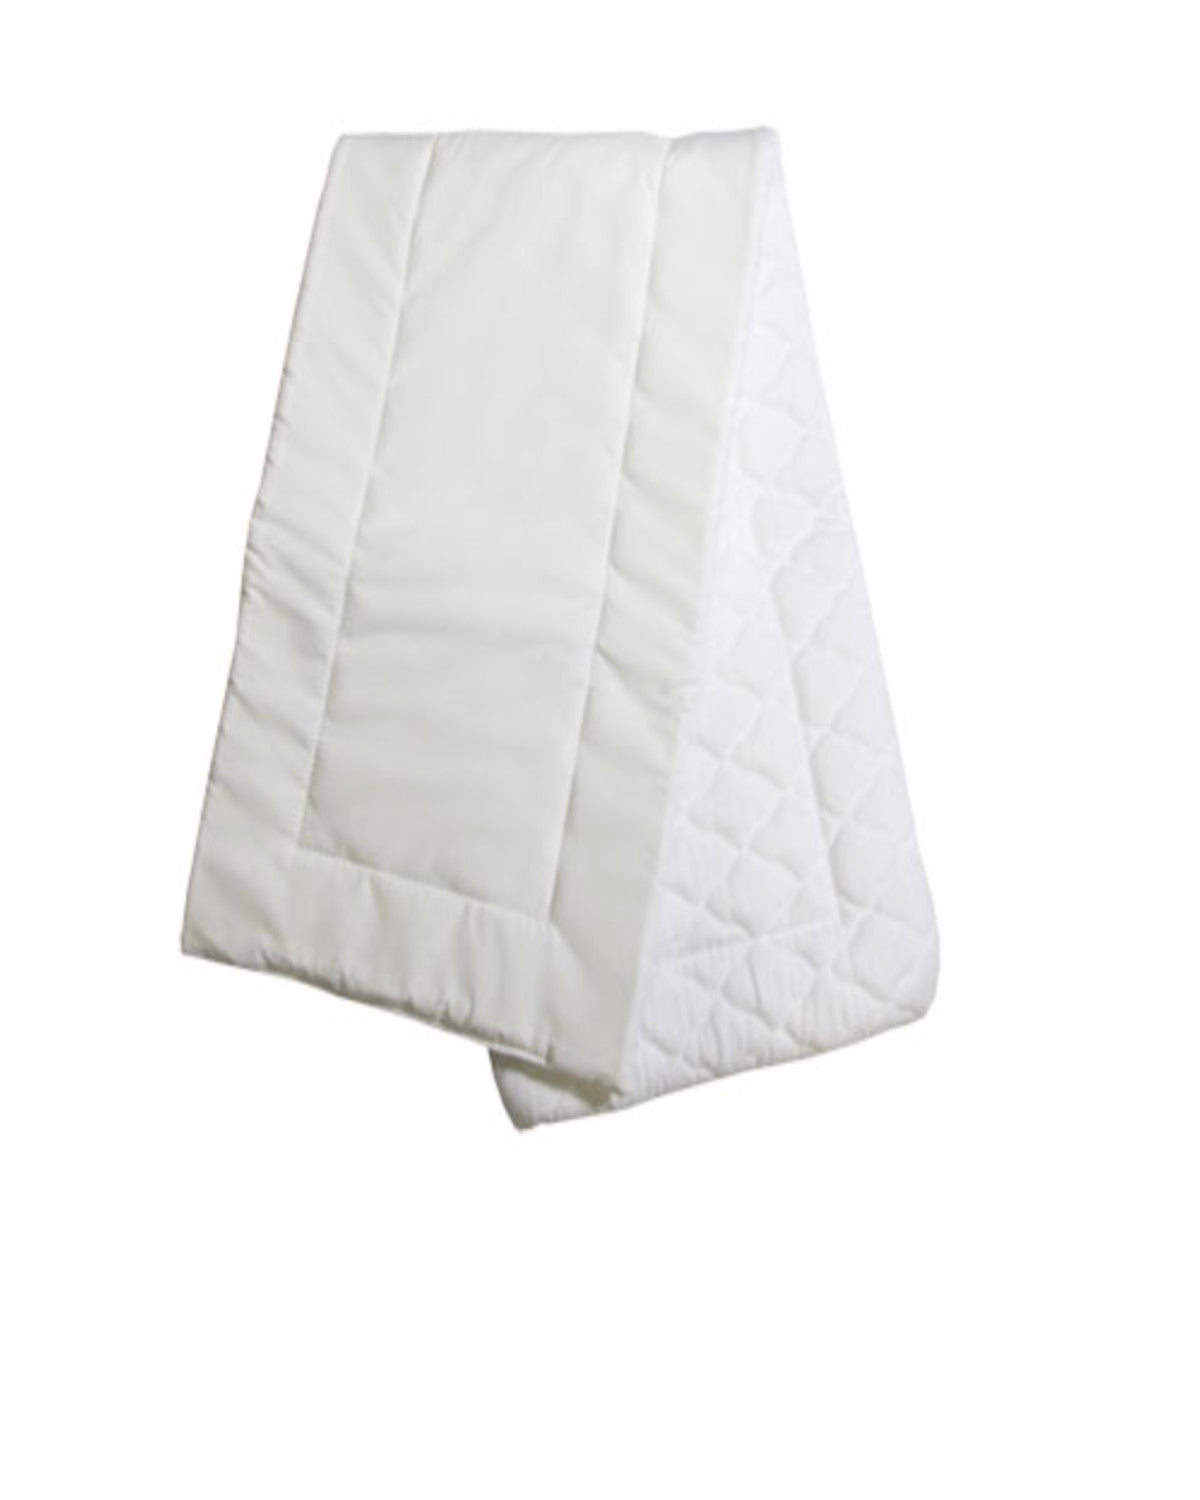 Wilkers Pillow Wraps Combo Quilt XL